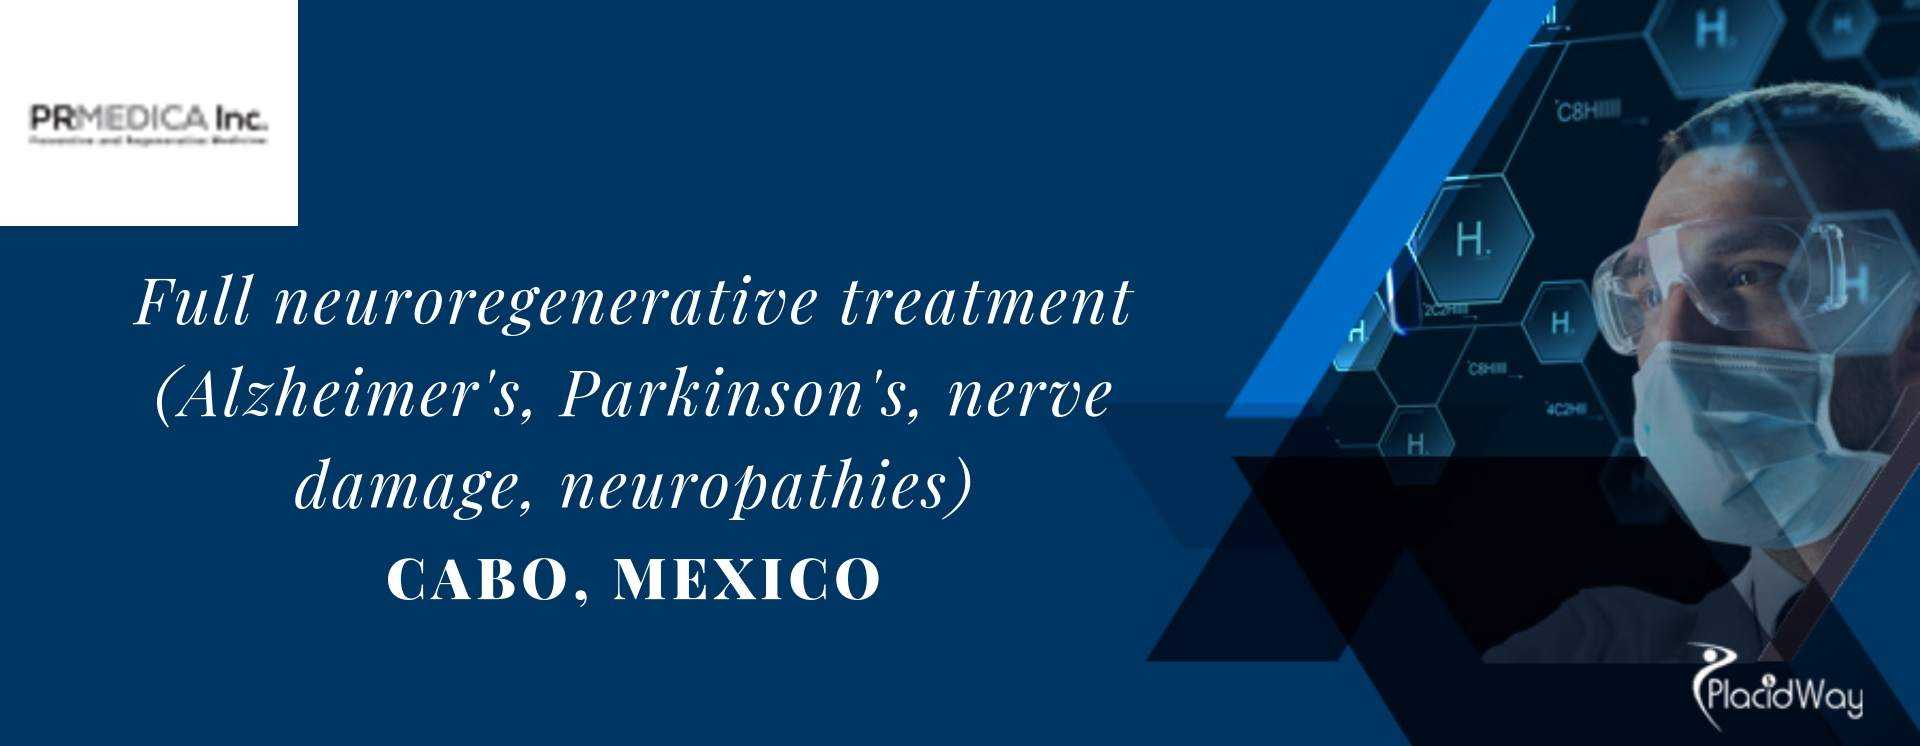 Full Neuroregenerative Treatment in Cabo, Mexico